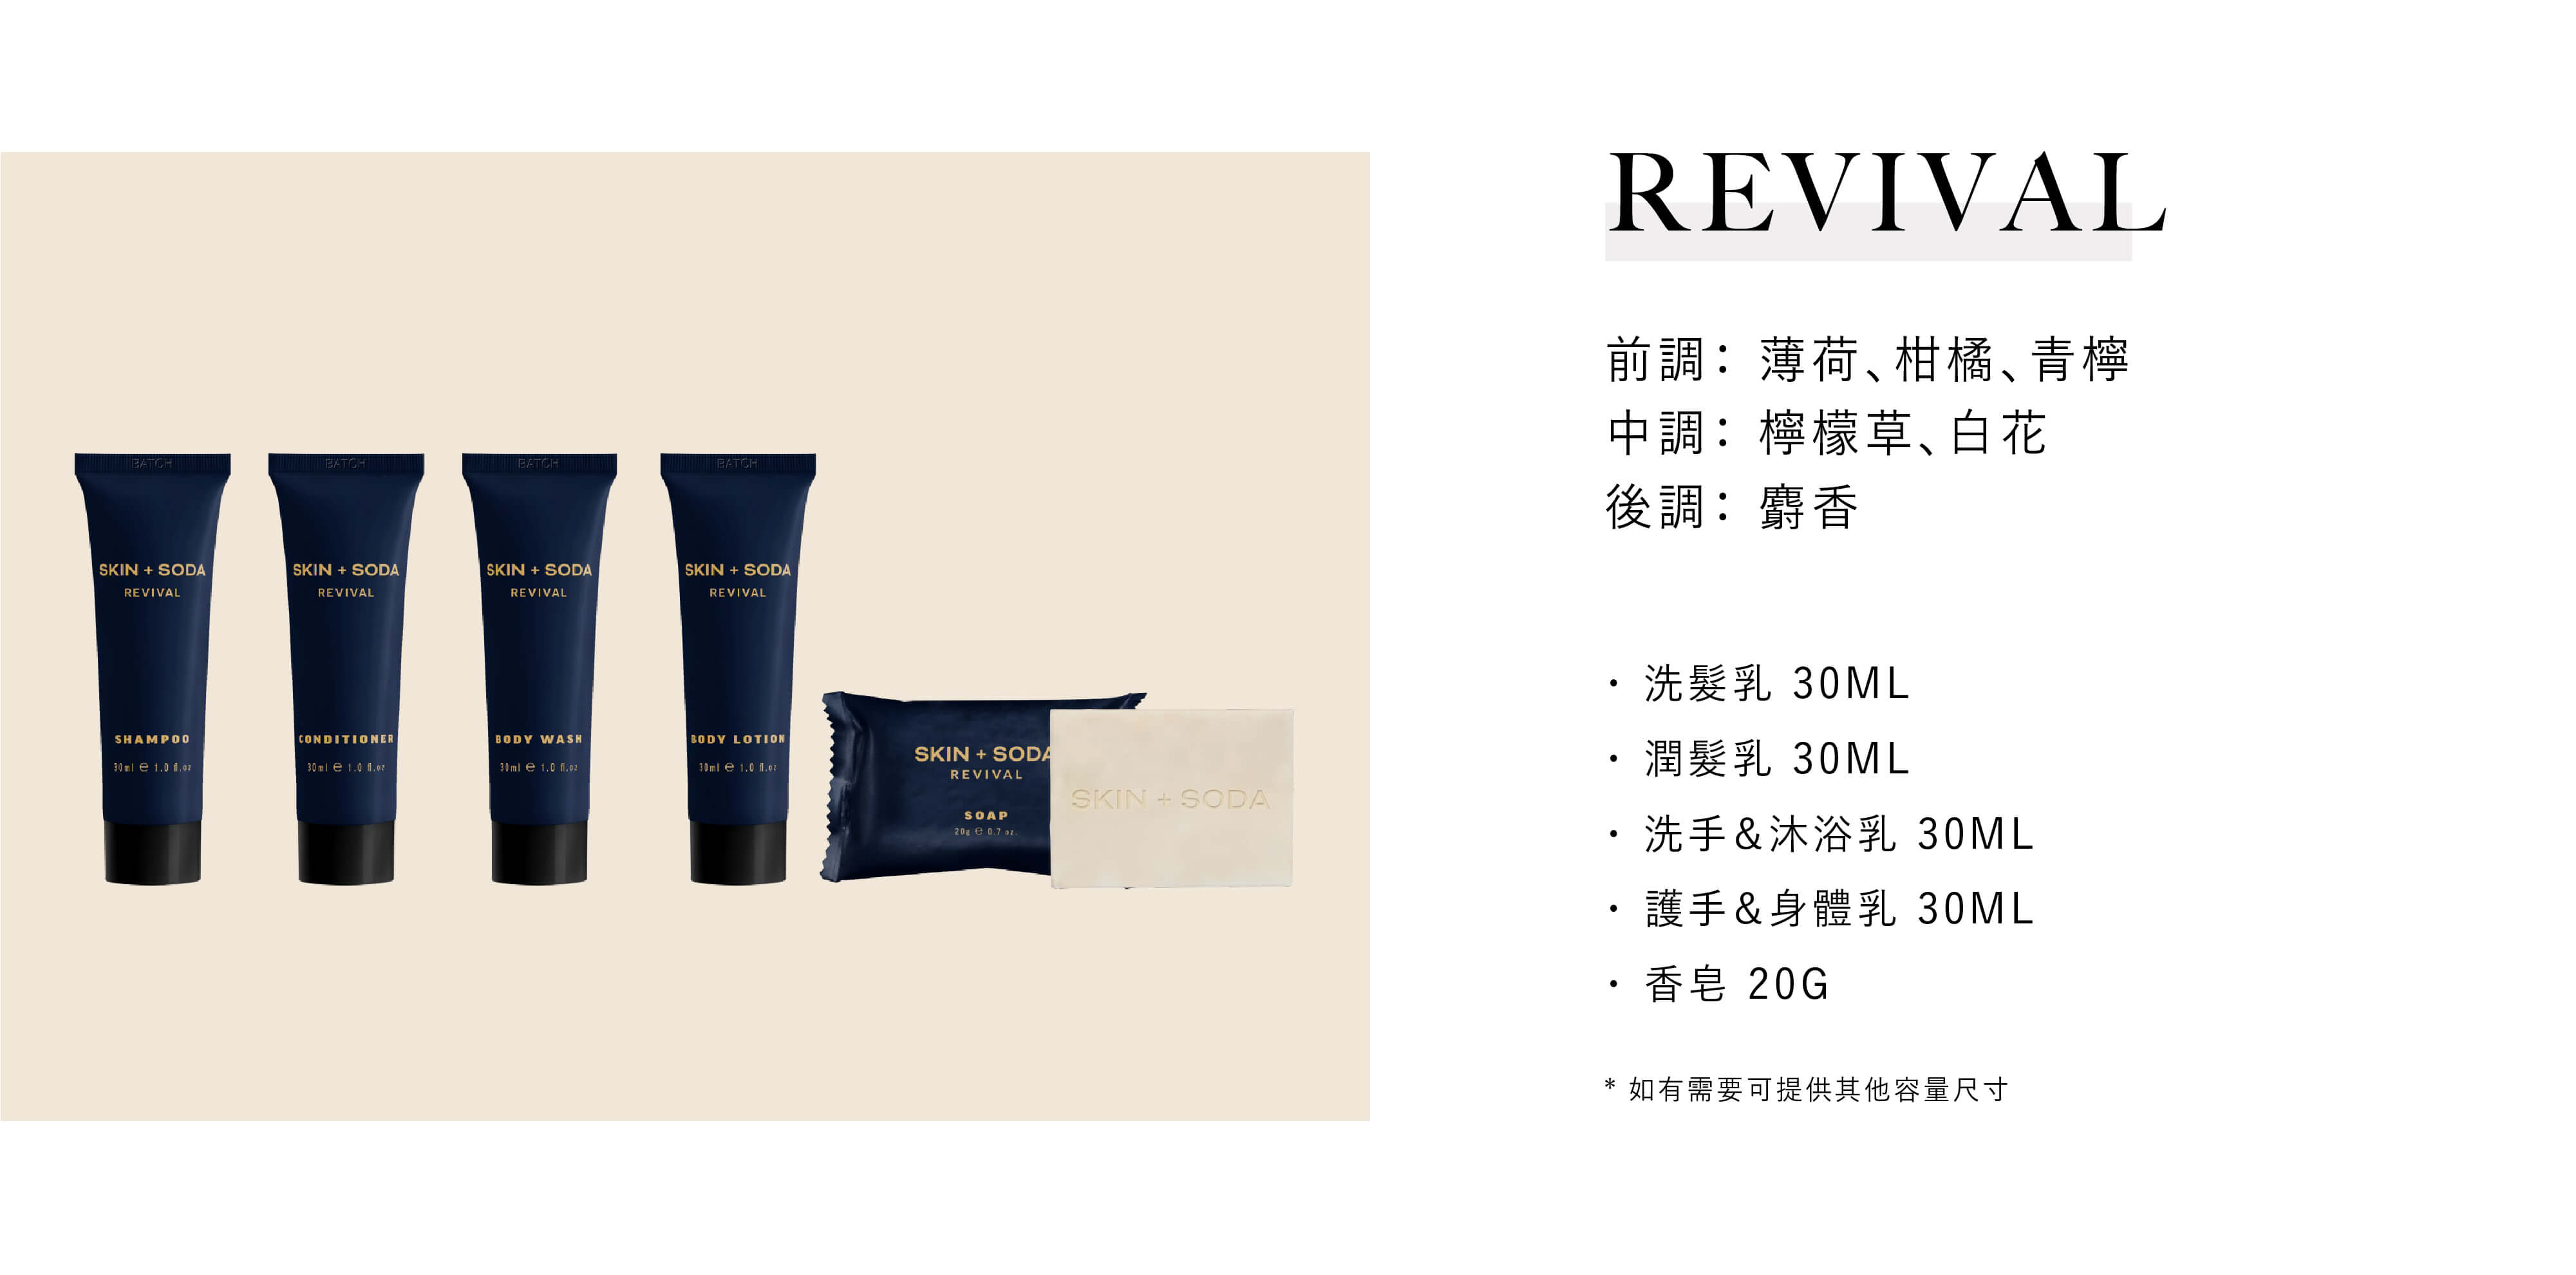 SKIN + SODA的飯店沐浴用品REVIVAL系列，由Sunlife晨居飯店沐浴備品廠商供應